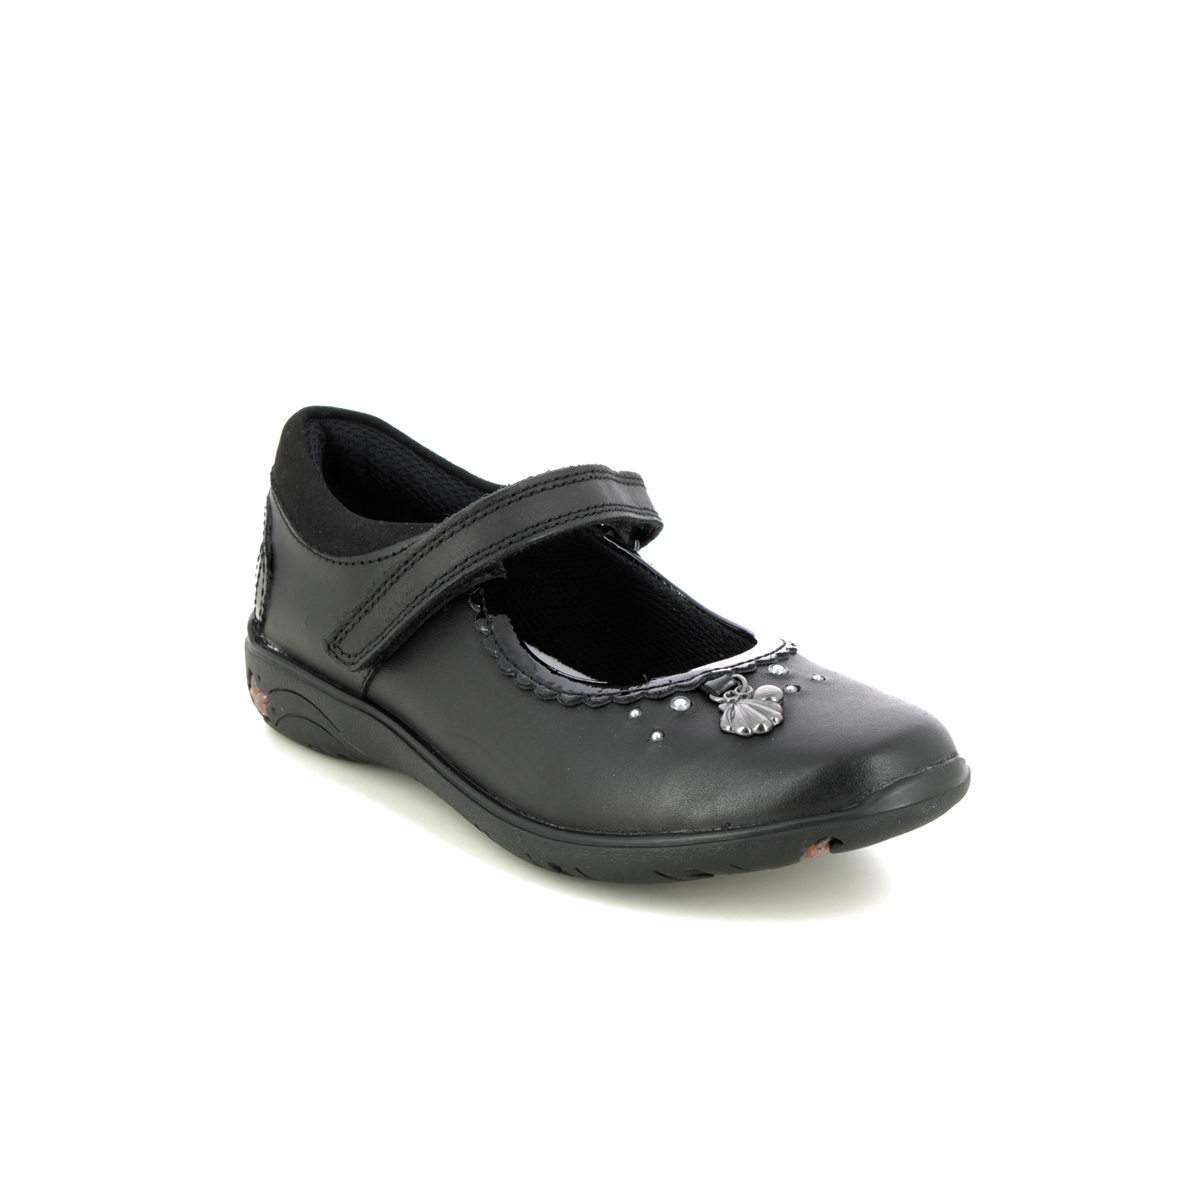 Clarks Sea Shimmer K Black Leather Kids Girls School Shoes 555426F In Size 2.5 In Plain Black Leather F Width Fitting Regular Fit For School For kids